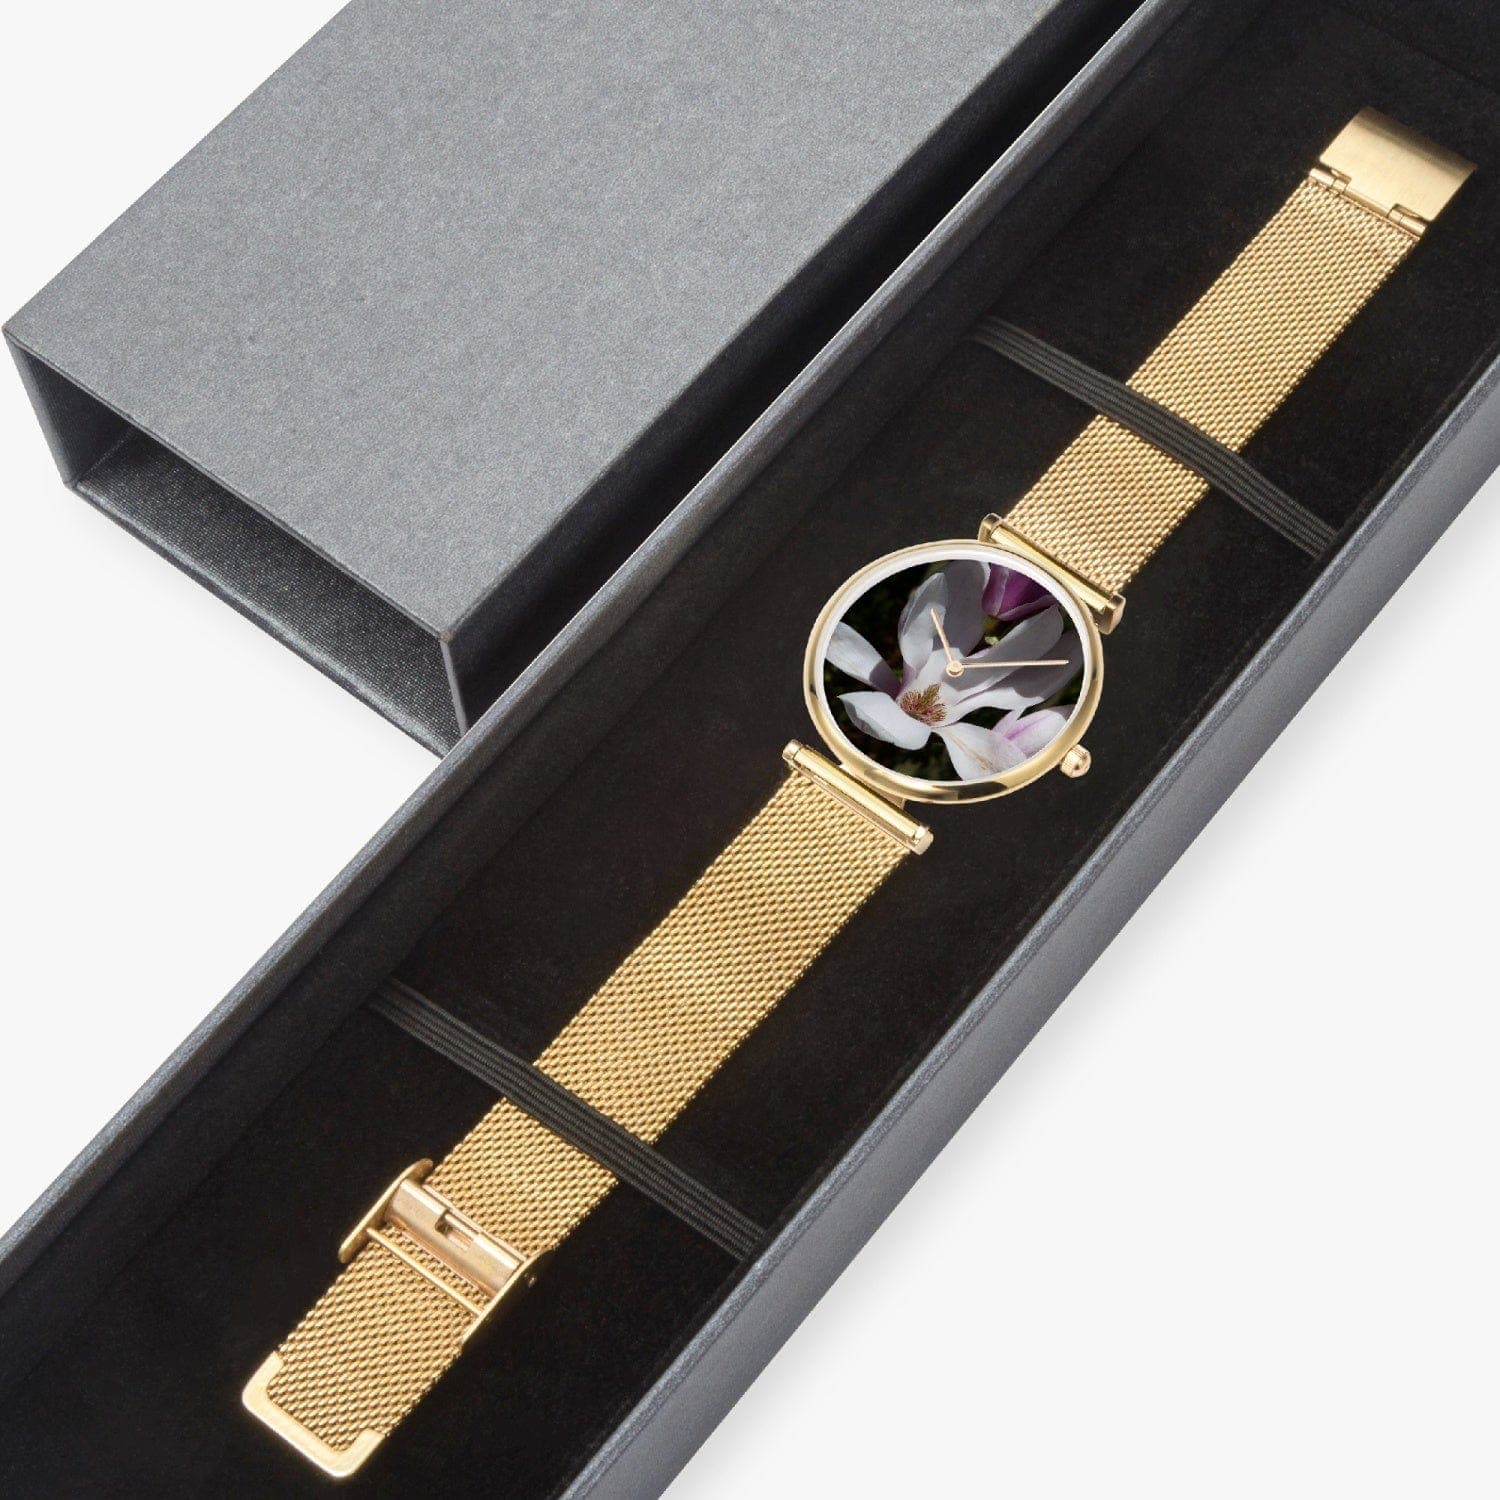 Sweet Magnolia. New Stylish Ultra-Thin Quartz Watch. Designer watch by Ingrid Hütten